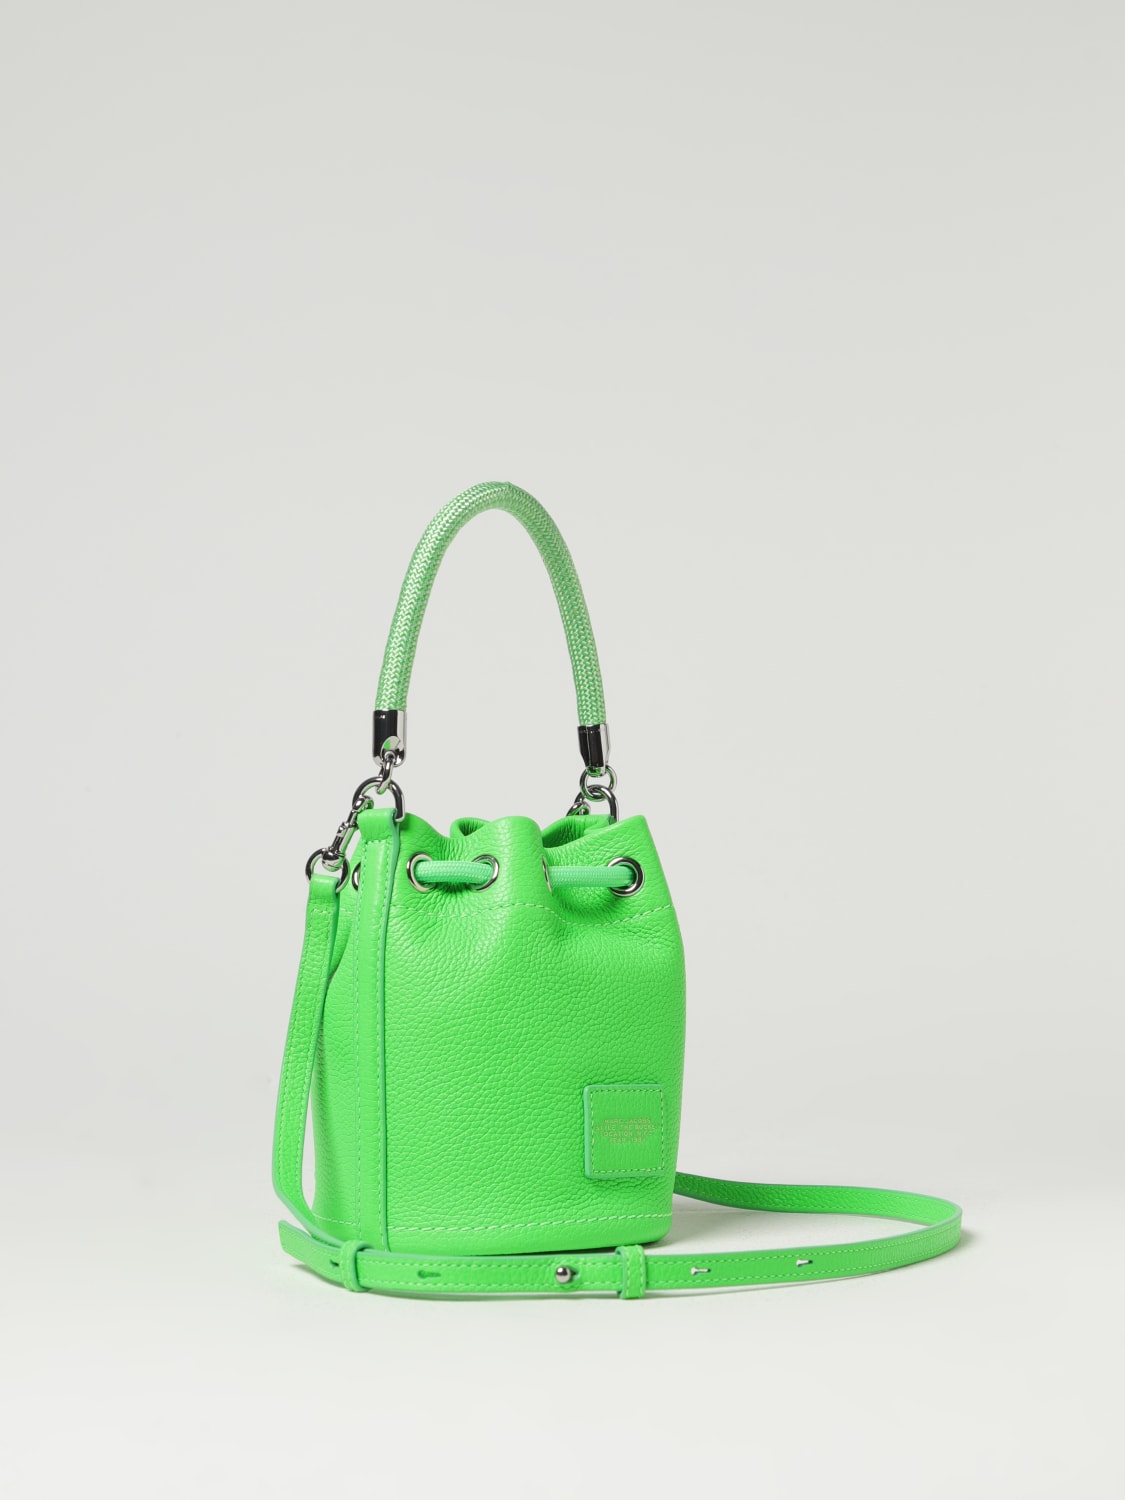 Marc Jacobs Green neon small crossbody bag